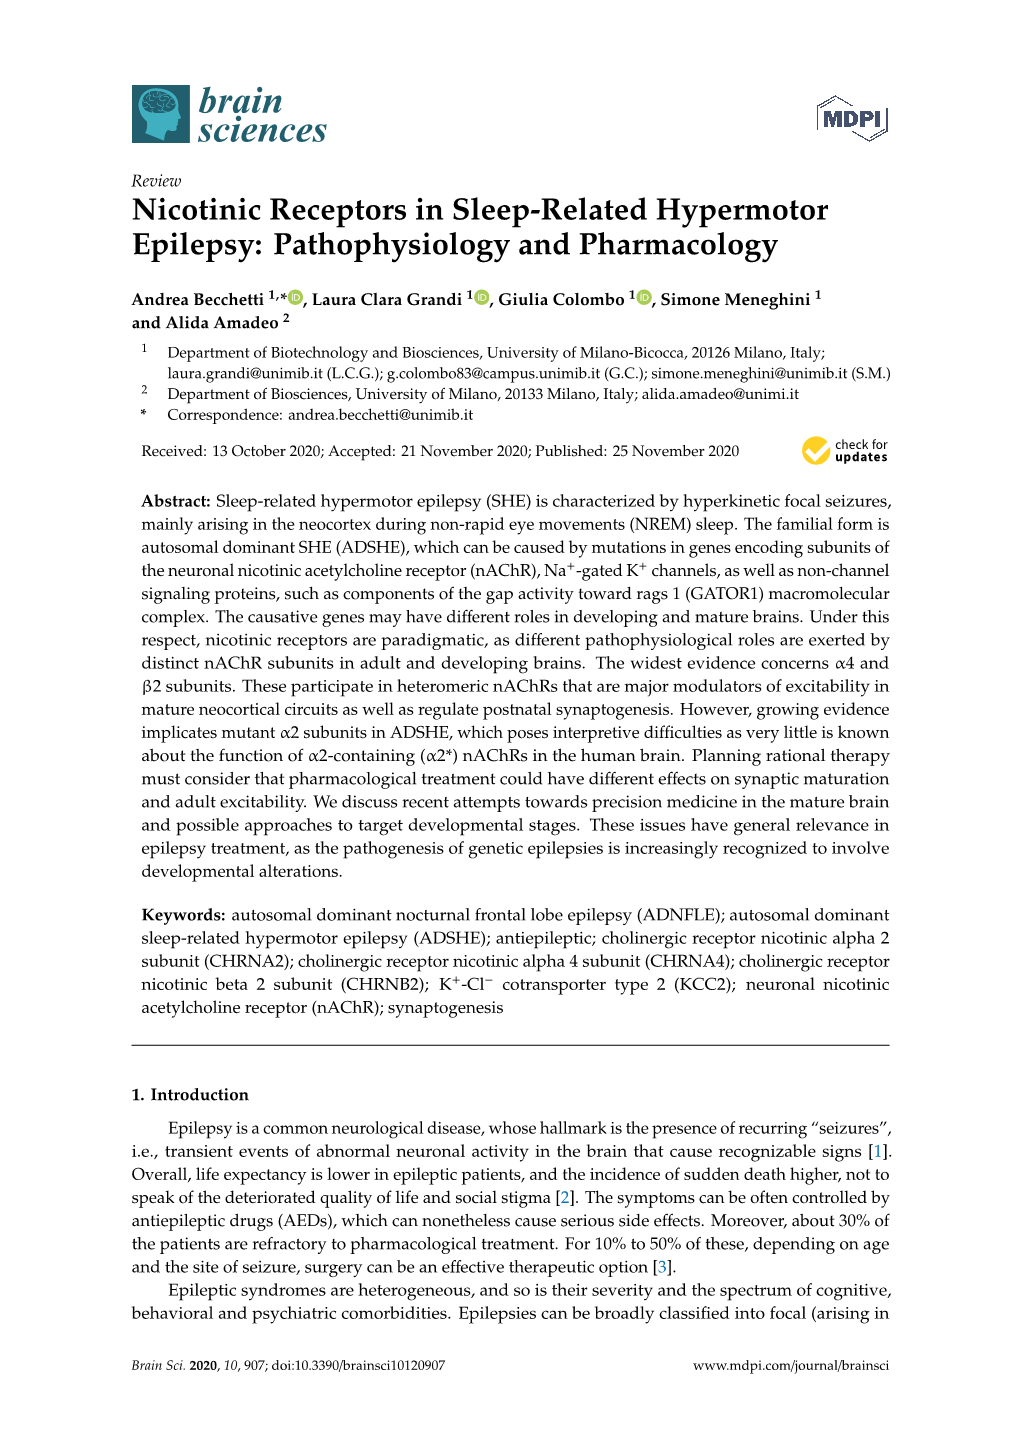 Nicotinic Receptors in Sleep-Related Hypermotor Epilepsy: Pathophysiology and Pharmacology